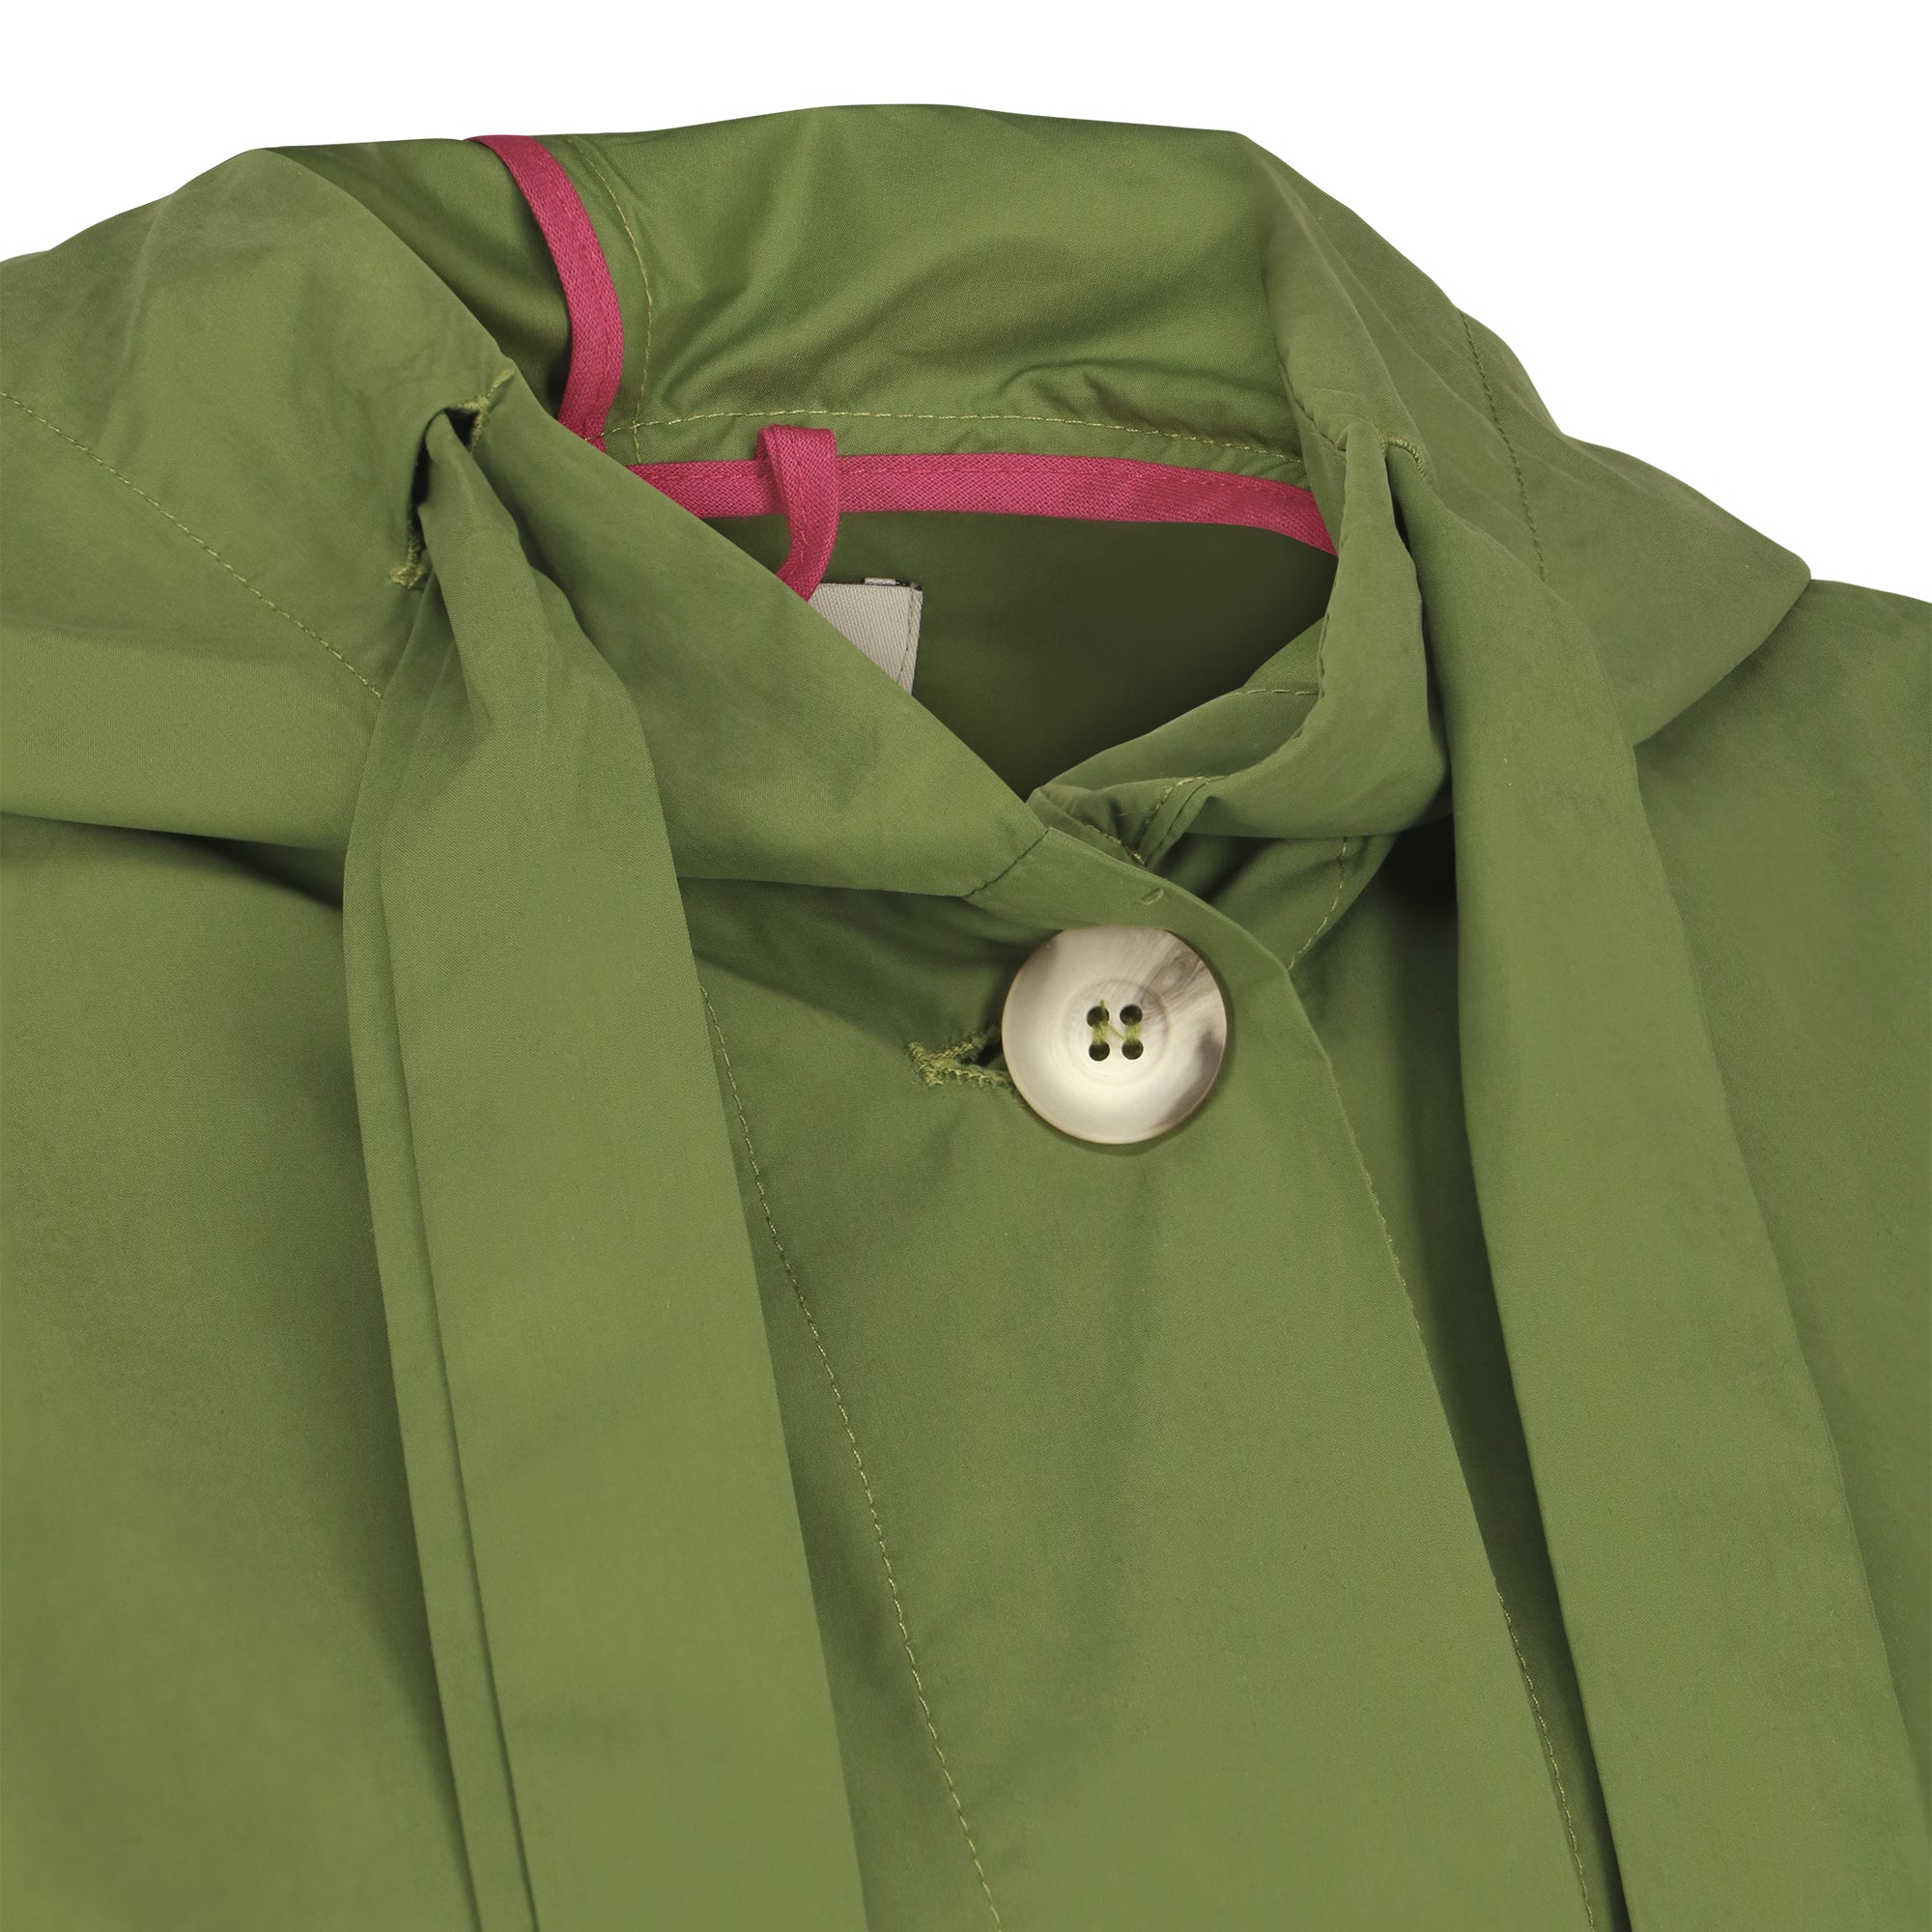 The classic raincoat - green color - neckline detail